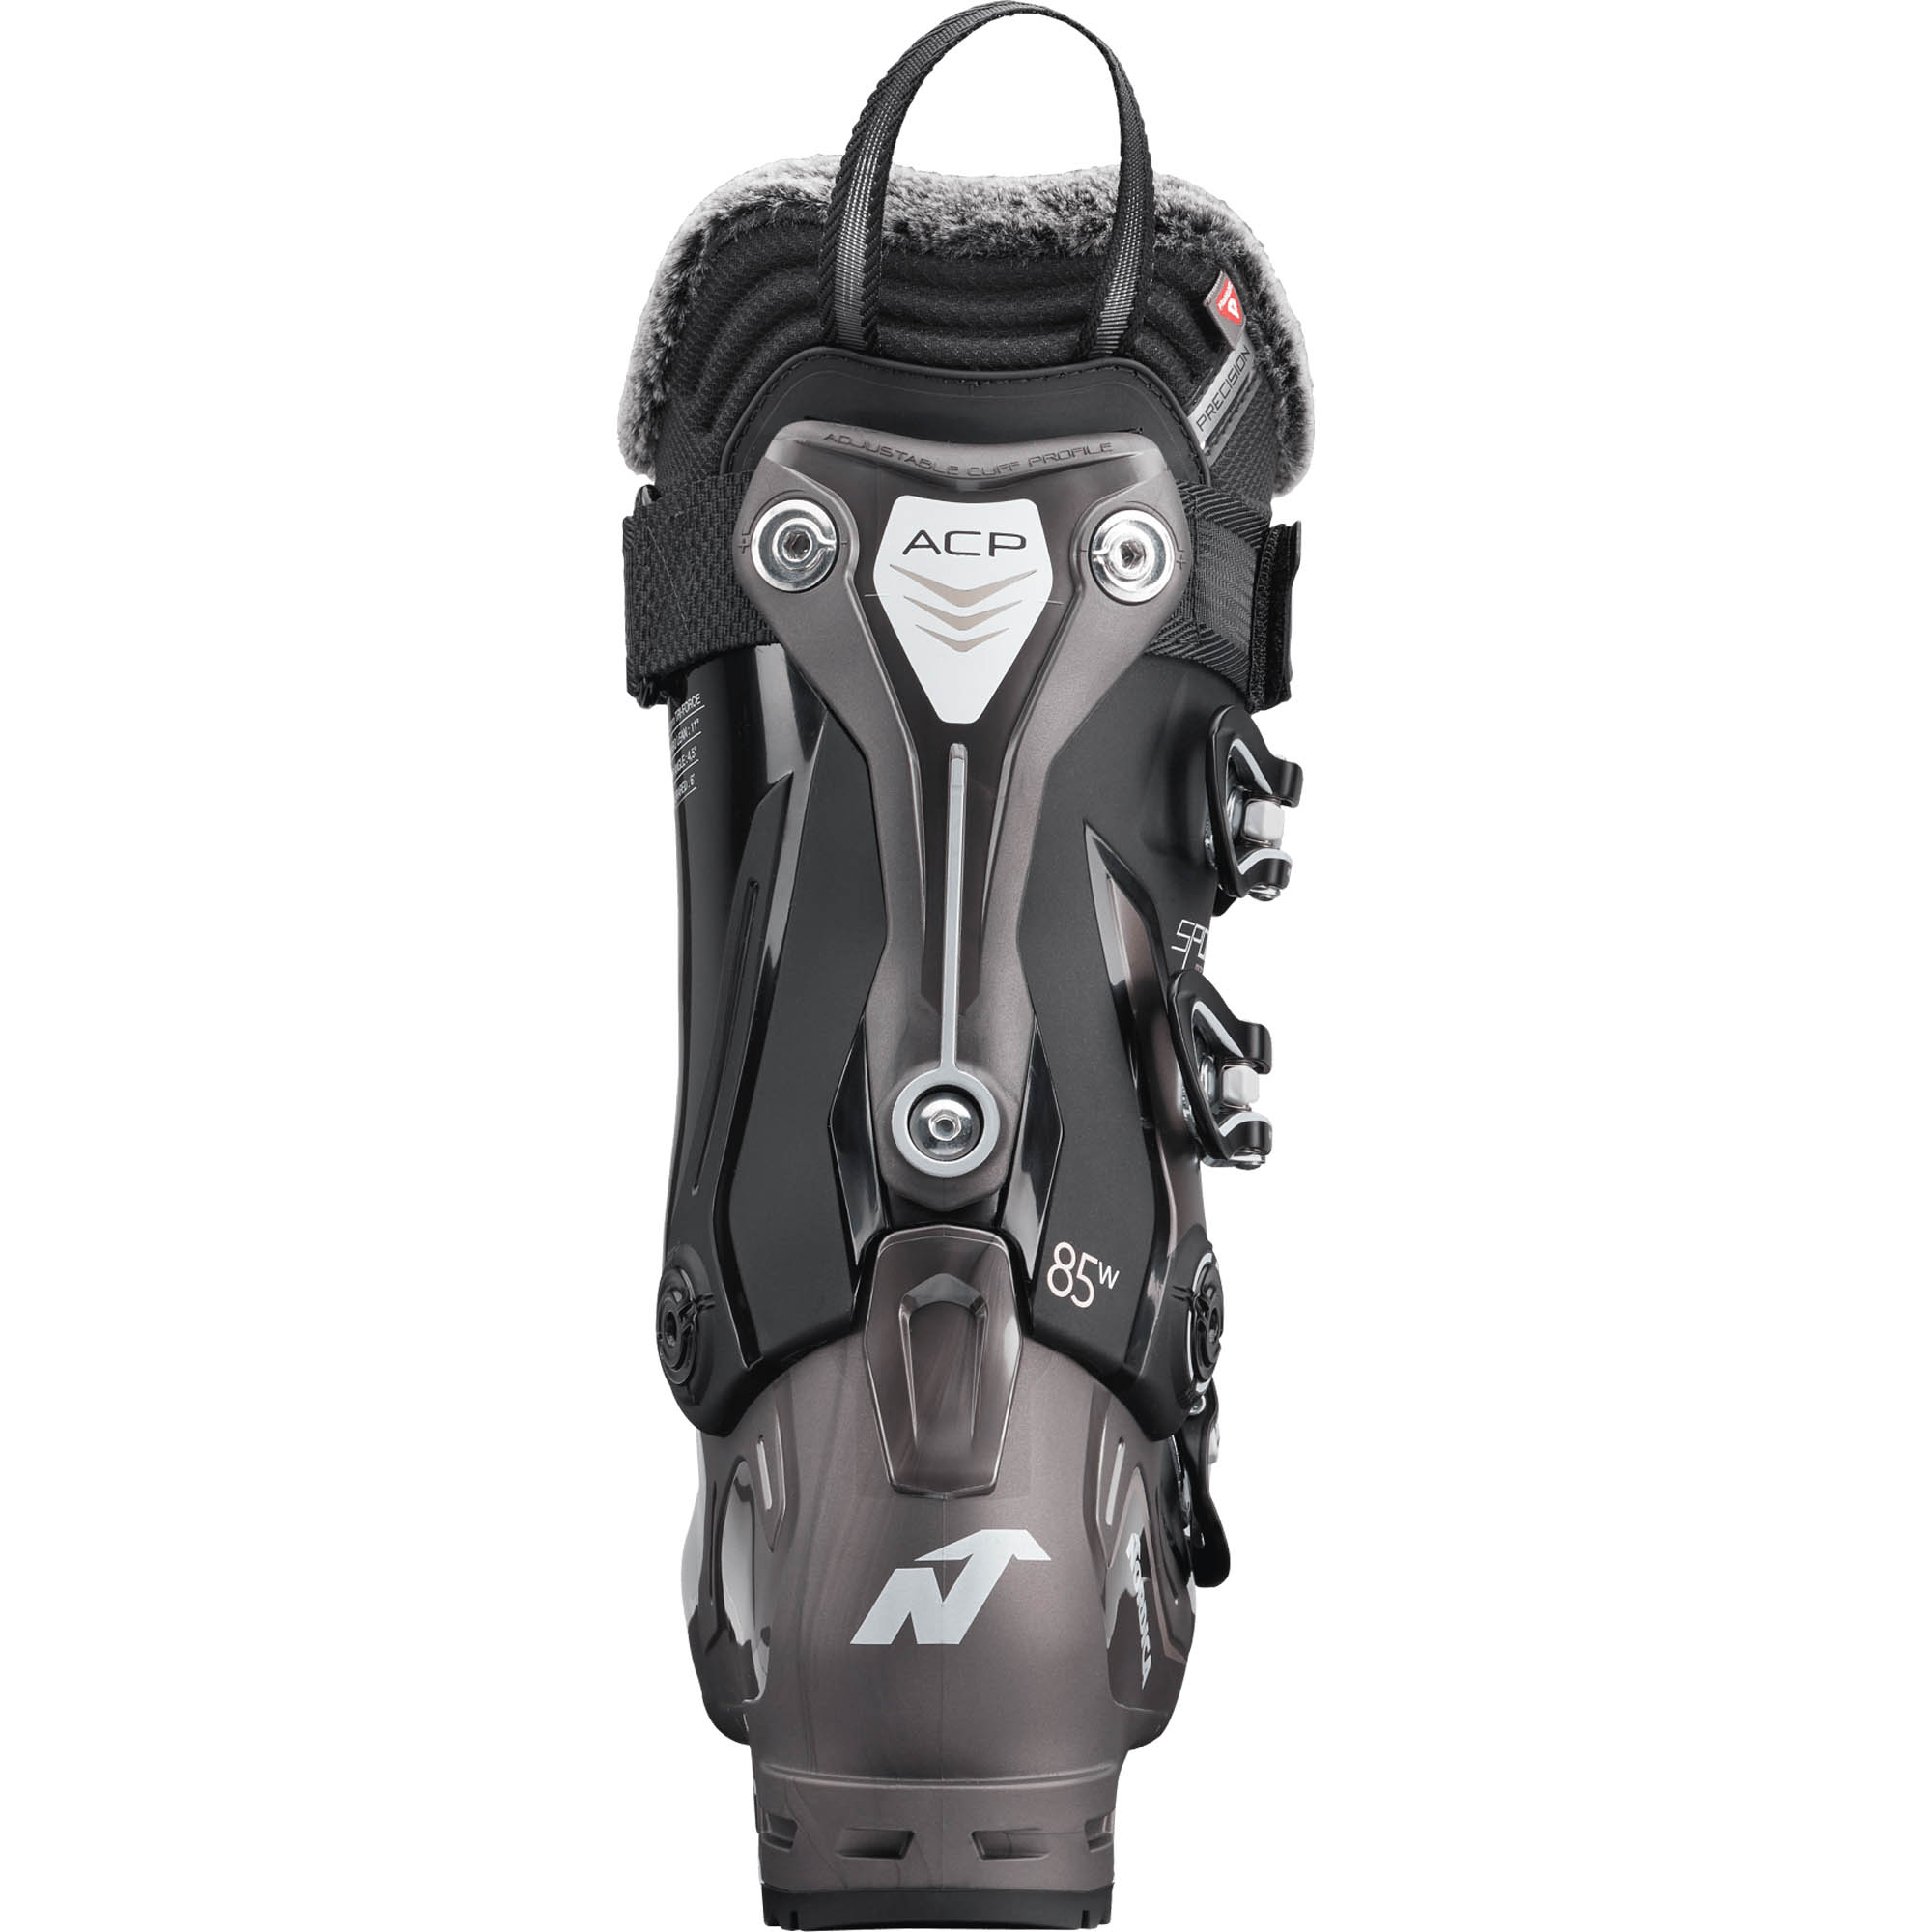 Nordica Sportmachine 3 85 W GW Women's GripWalk Ski Boots